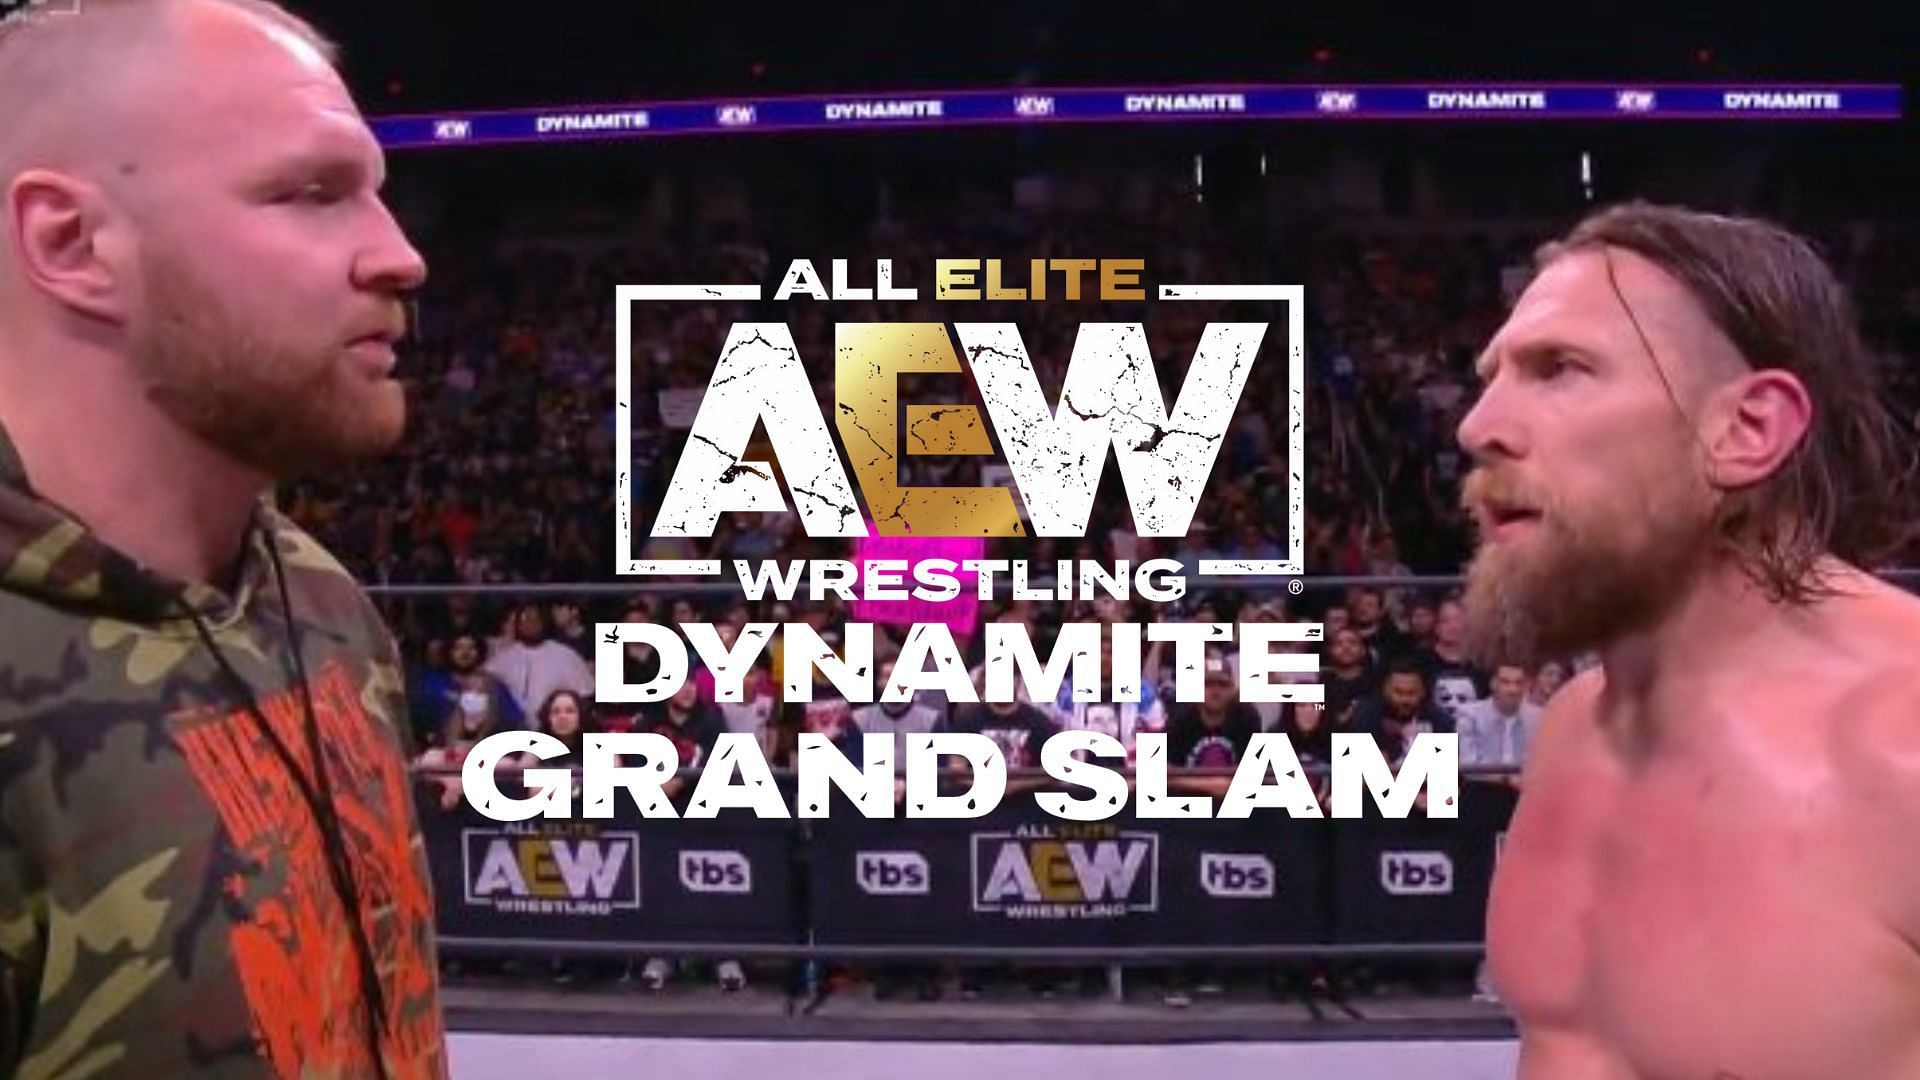 Jon Moxley will face Bryan Danielson at AEW Dynamite: Grand Slam